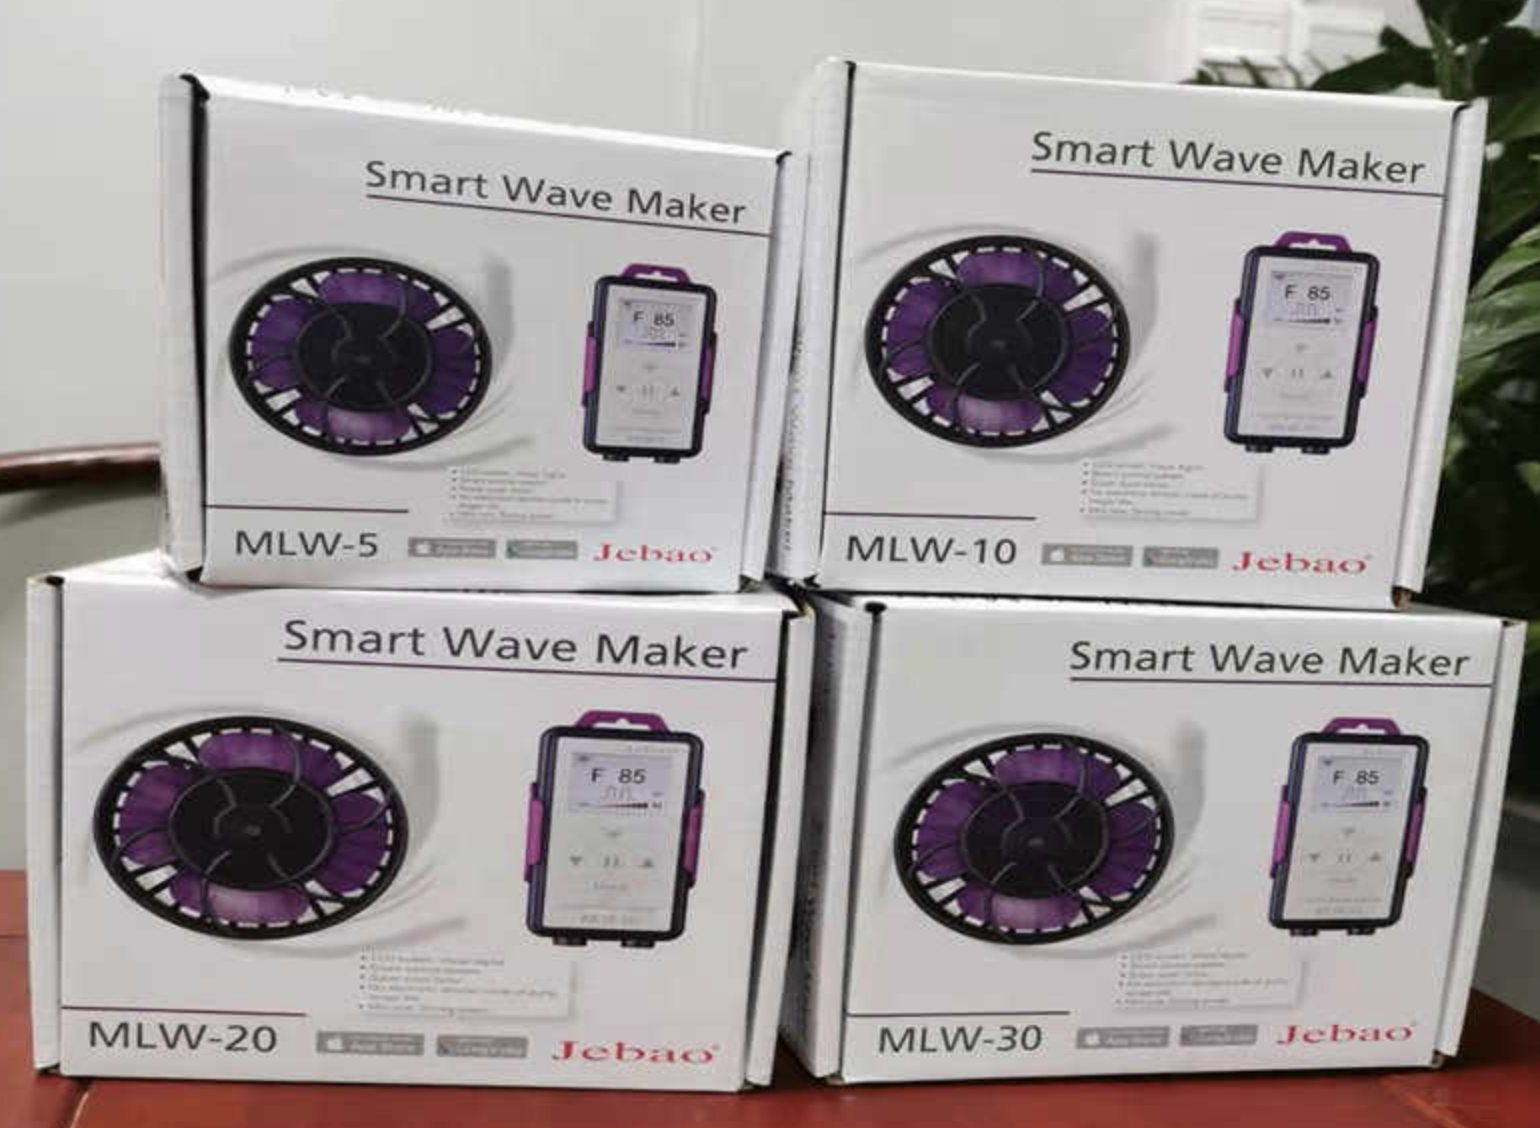 Jecod/Jebao MLW-30 Wi-Fi stromingspompen (sine wave)